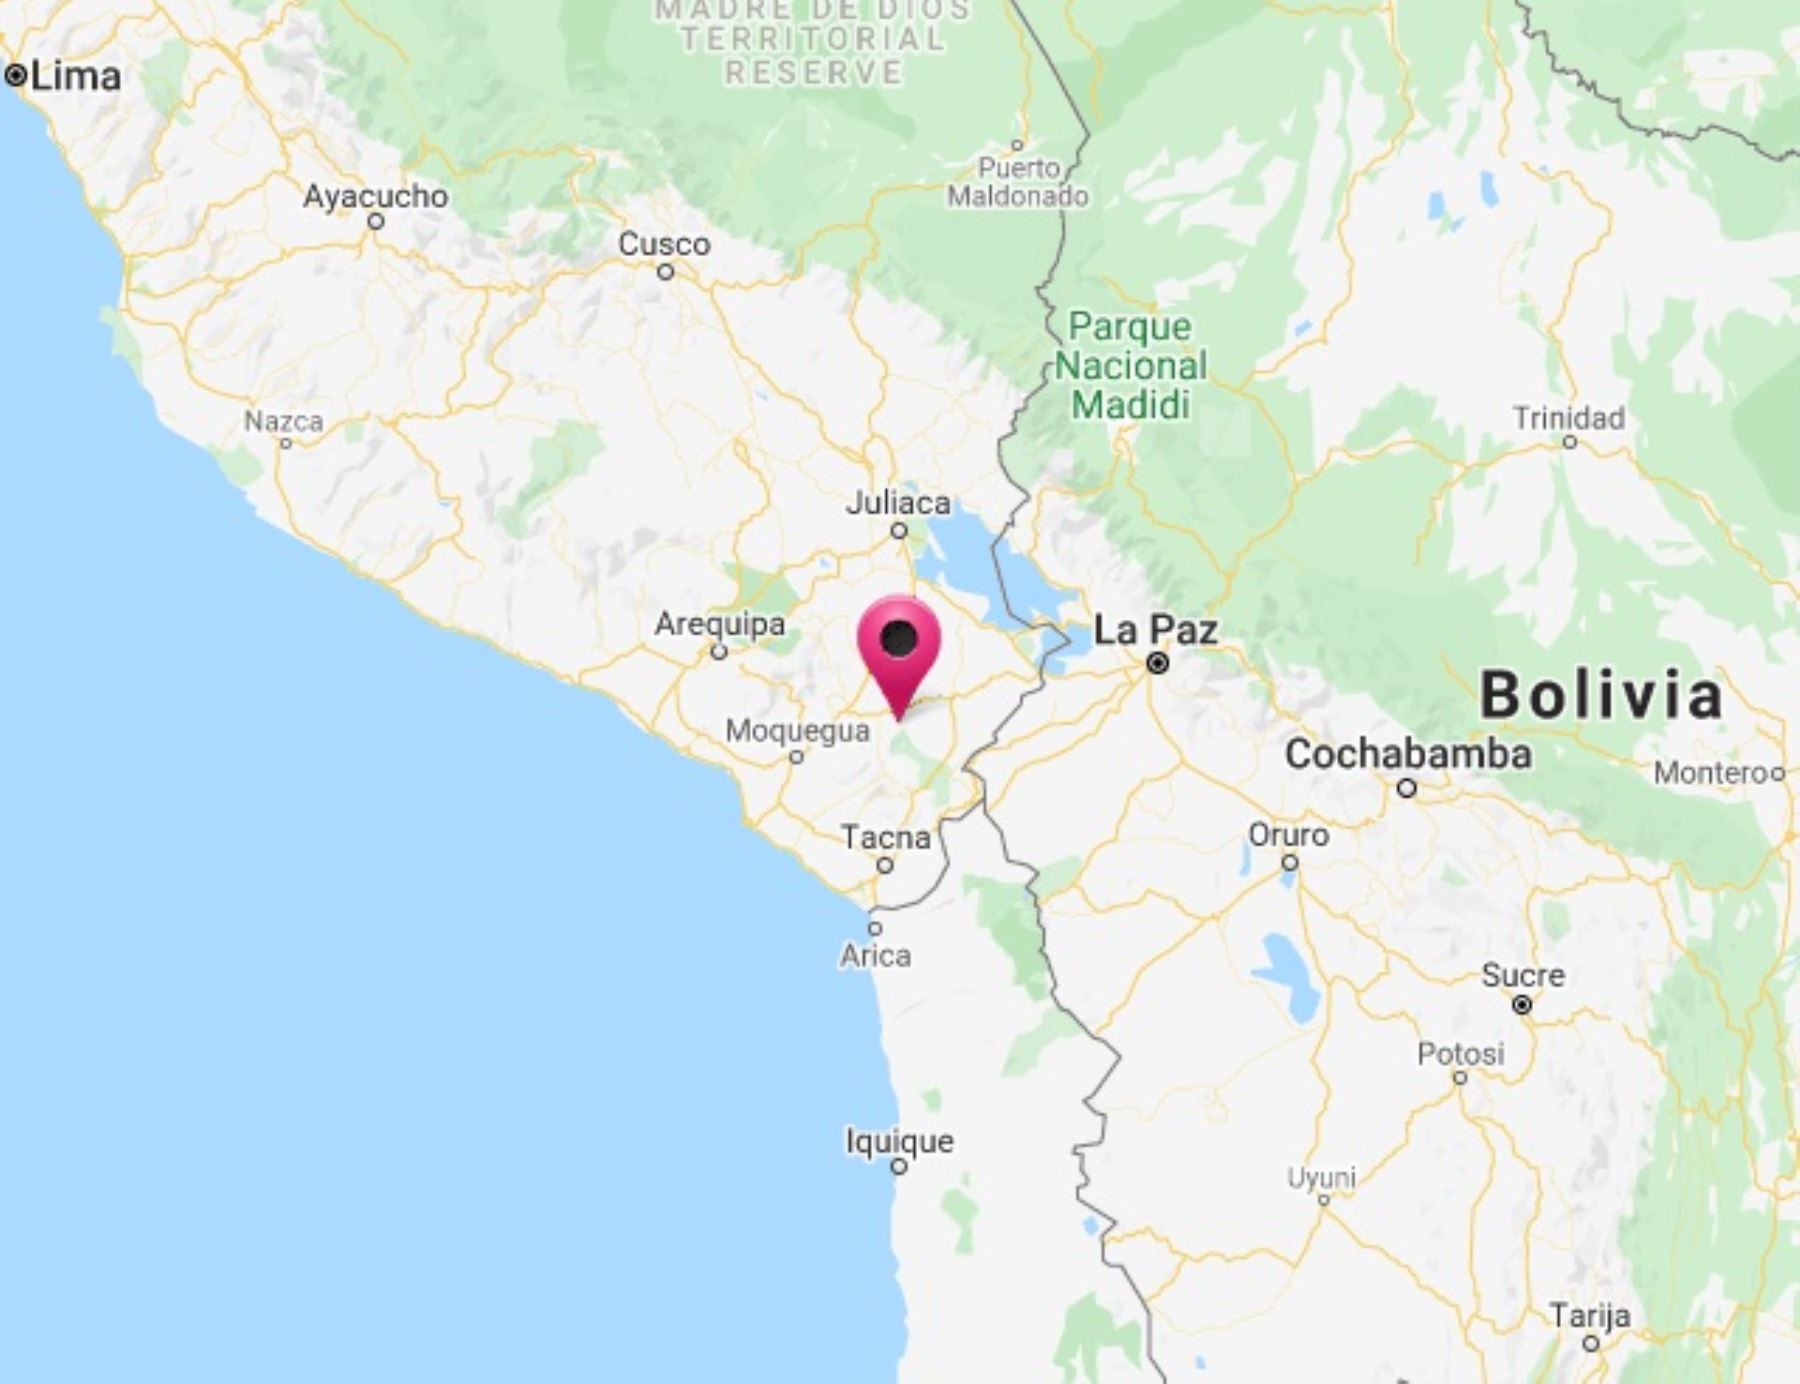 El epicentro del sismo de magnnitud 4.1 que remeció esta madrugada Tacna se localizó a 32 kilómetros de la localidad de Candarave.